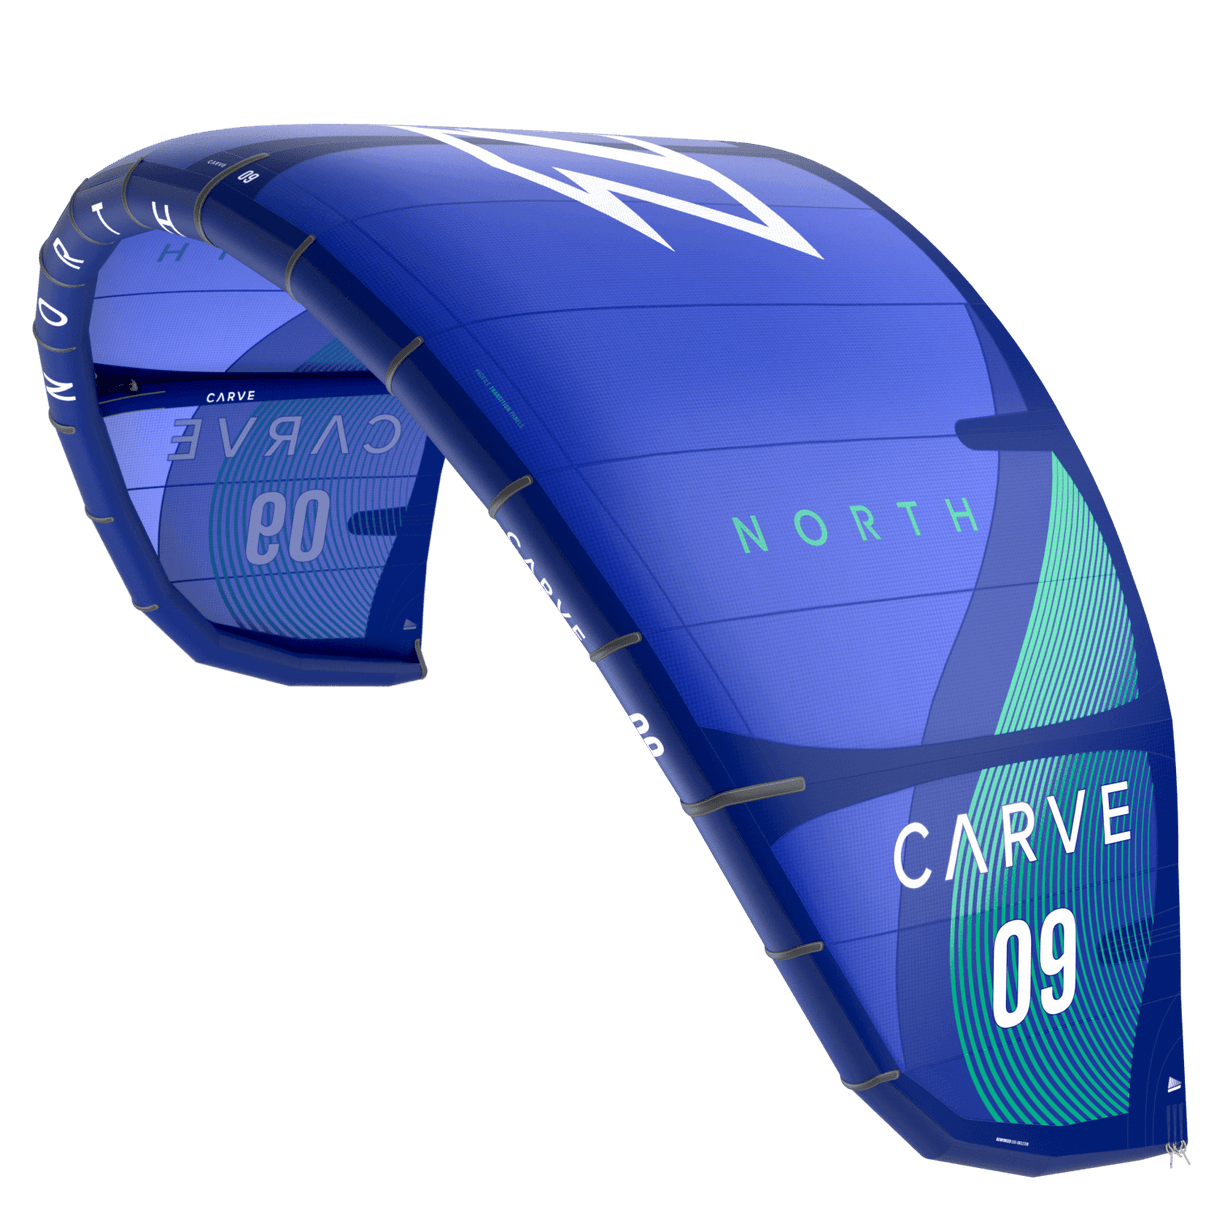 2021 North Carve Kite